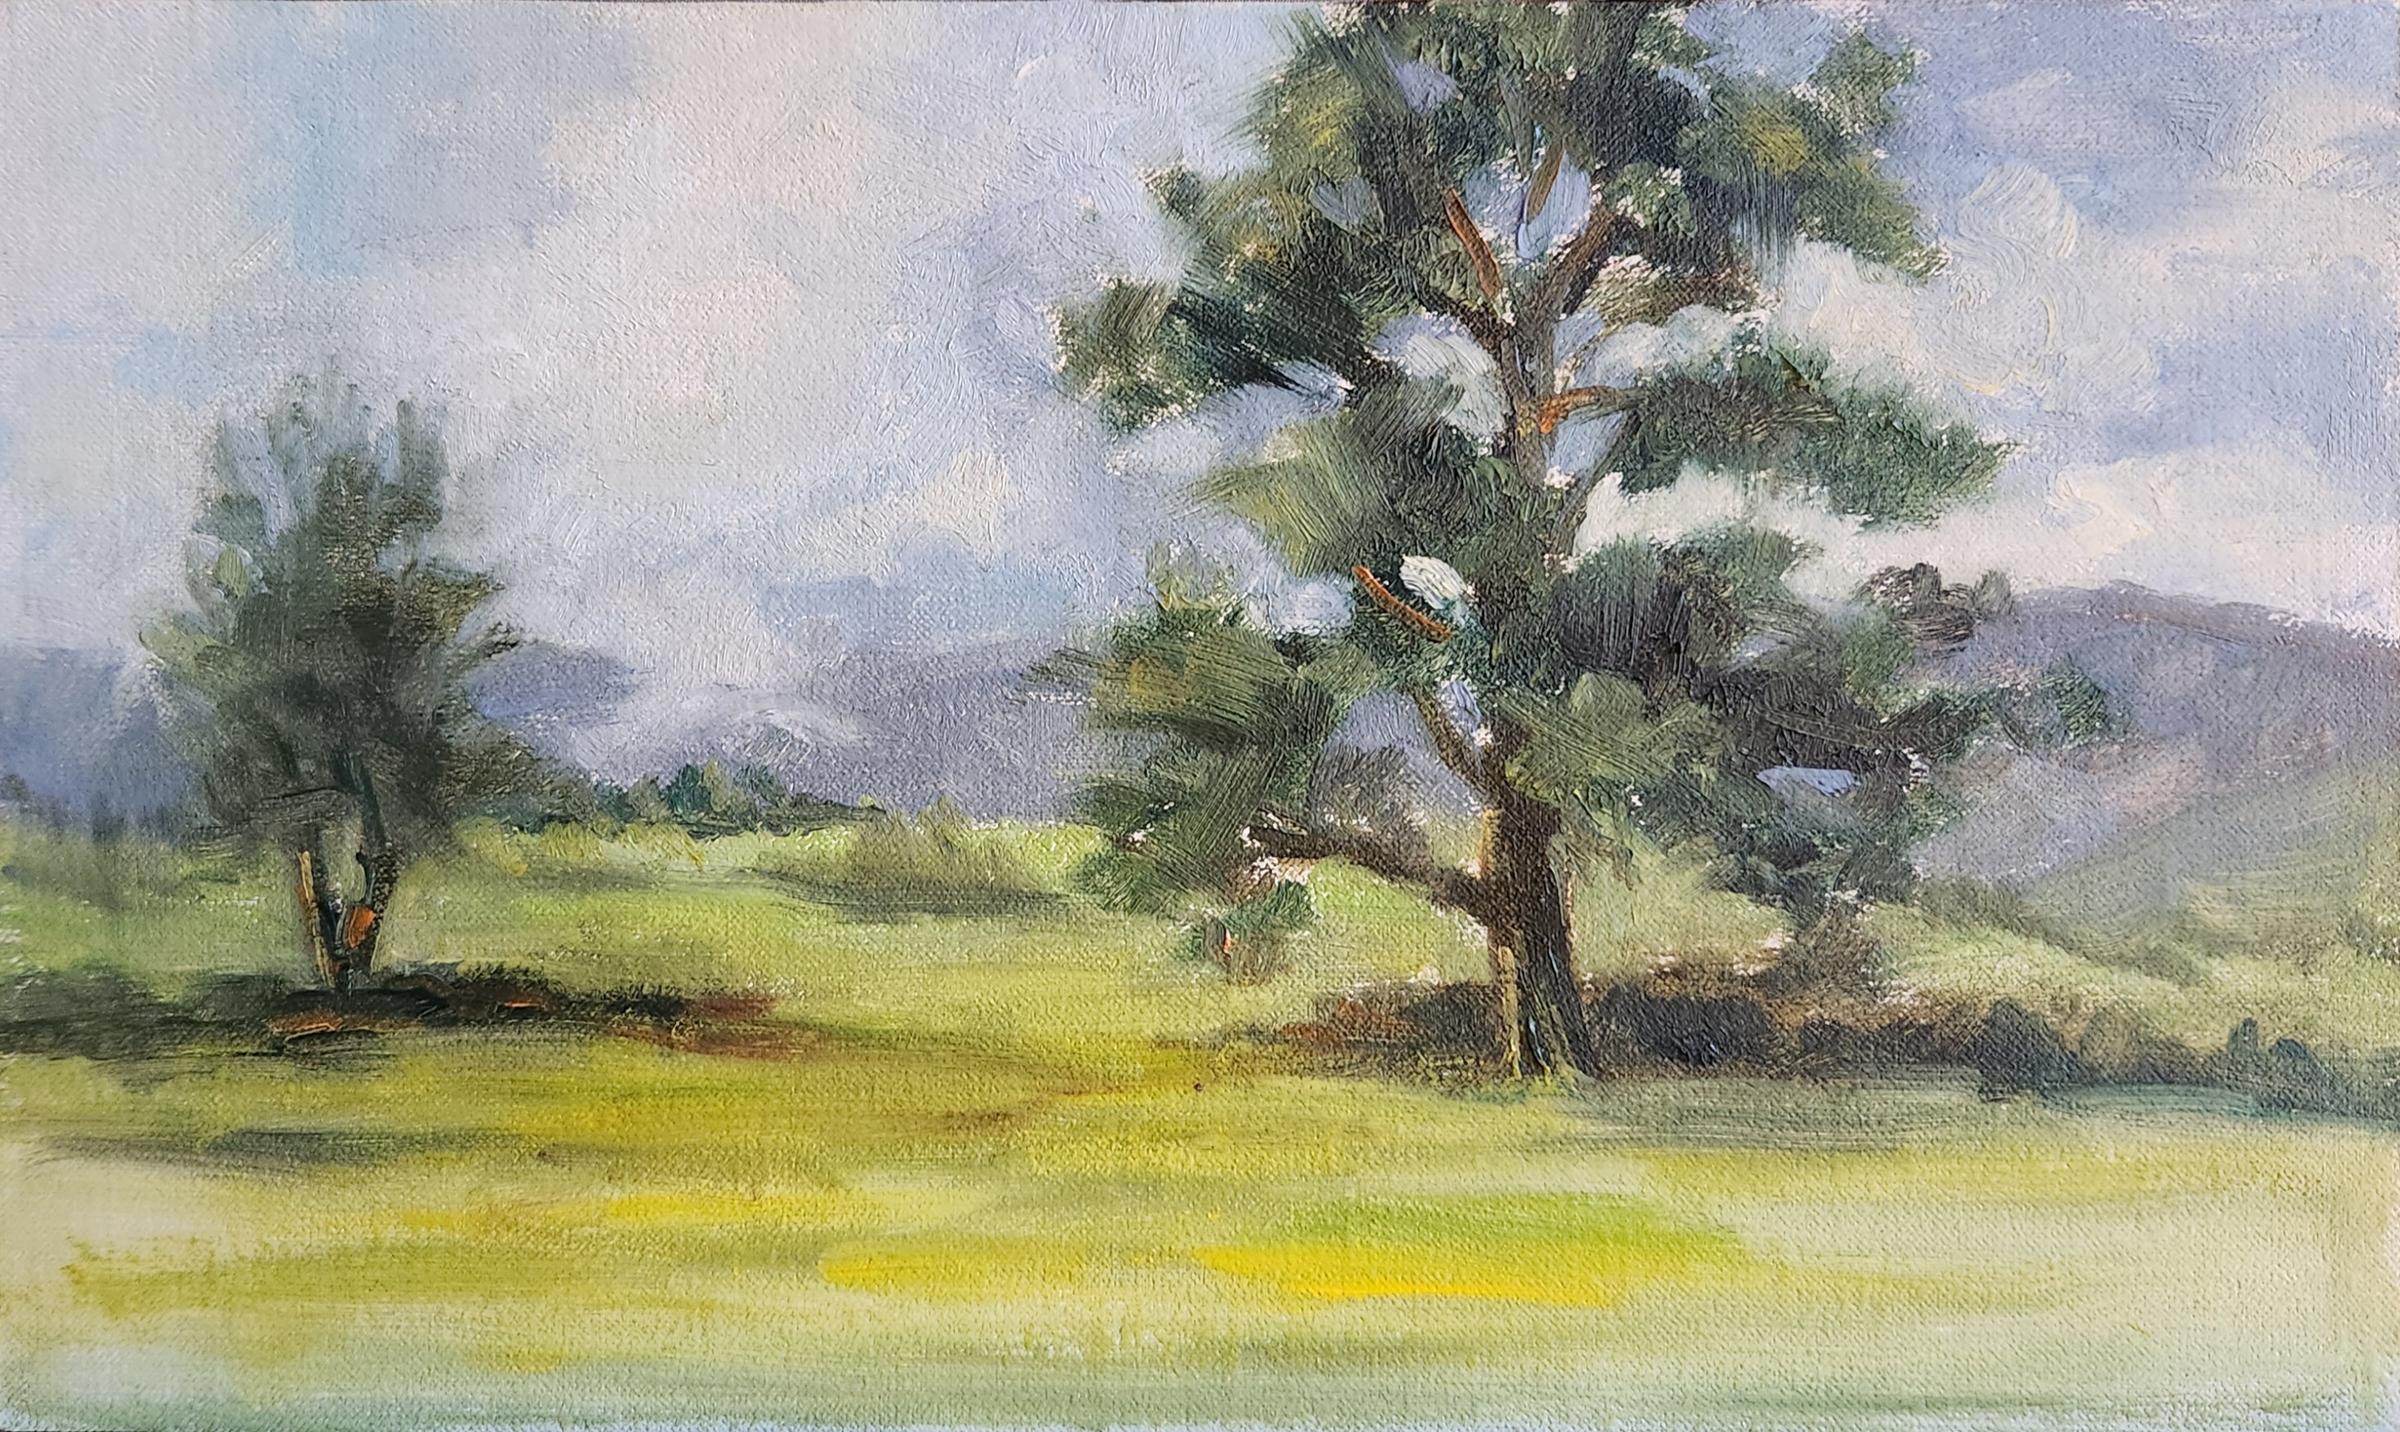 Lu Haskew Landscape Painting - Lone Cottonwood, 6x10" oil on board